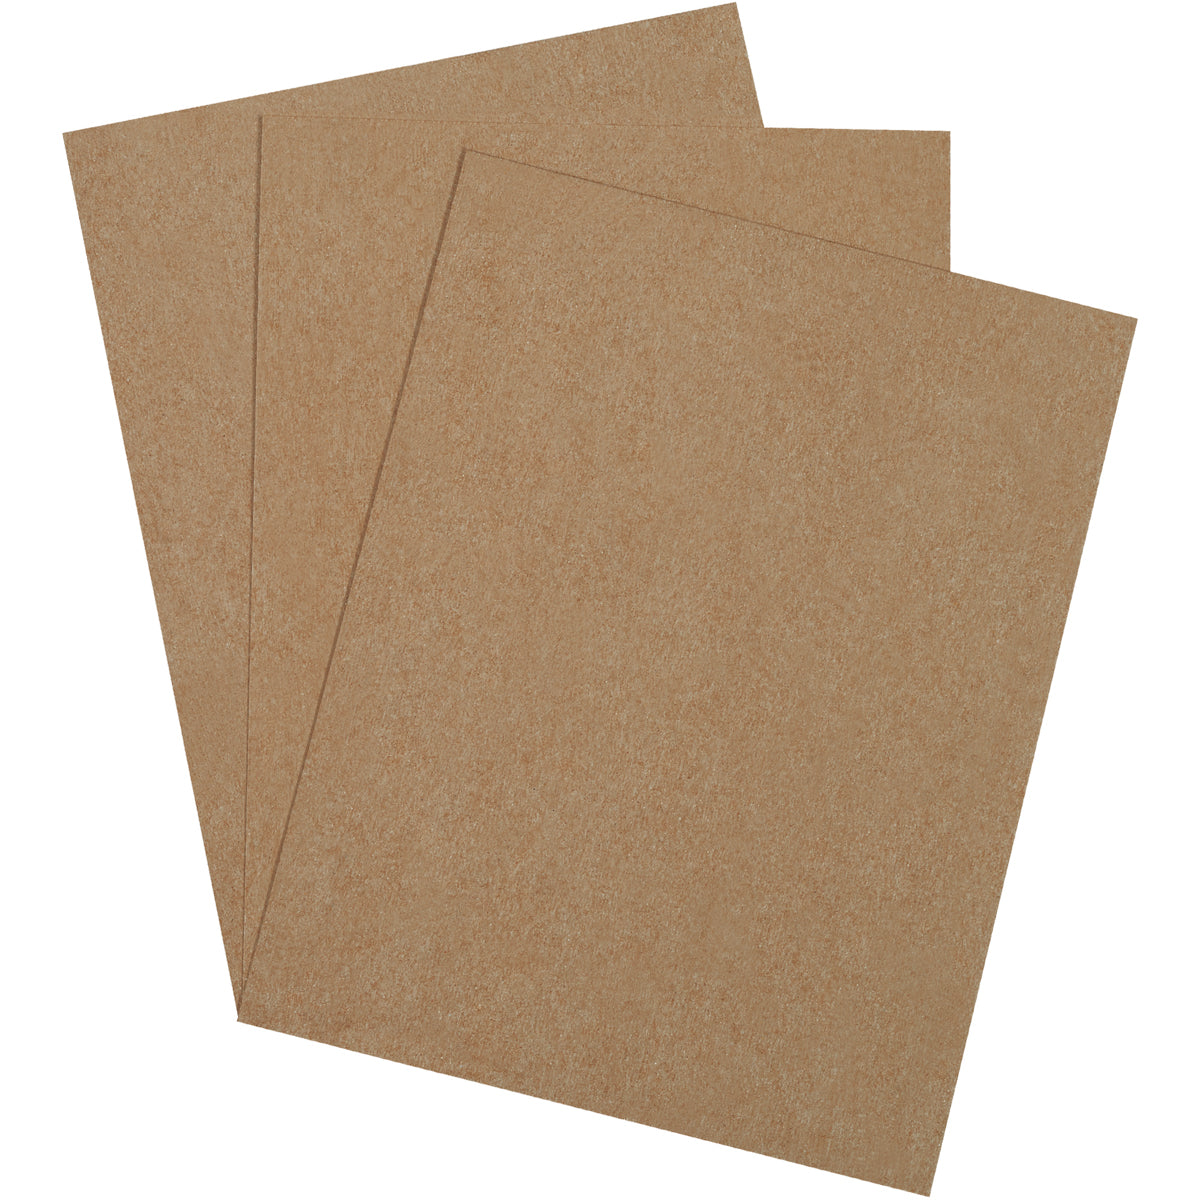 White Cardboard Sheet 8 1/2 X 11 - .022 Thick | Quantity: 480